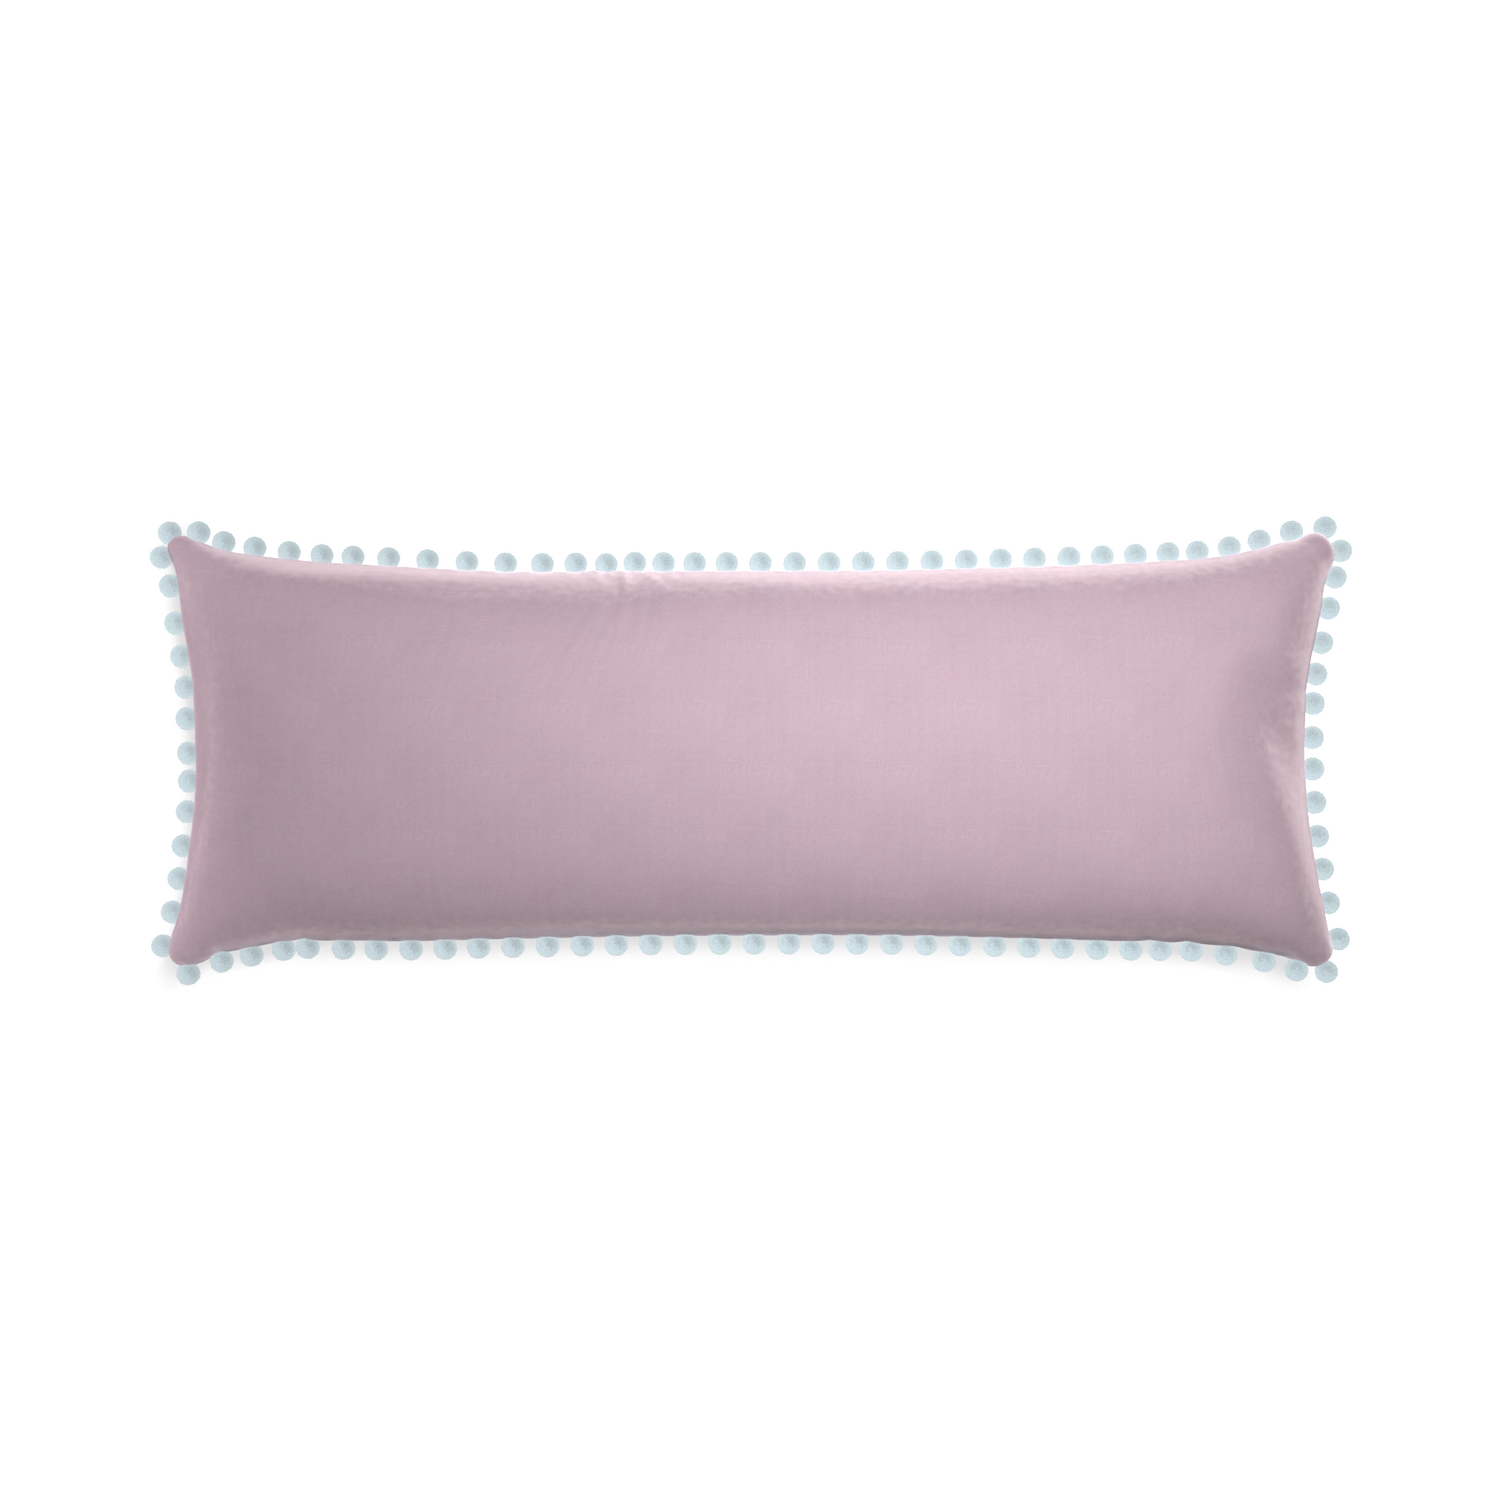 Xl-lumbar lilac velvet custom pillow with powder pom pom on white background